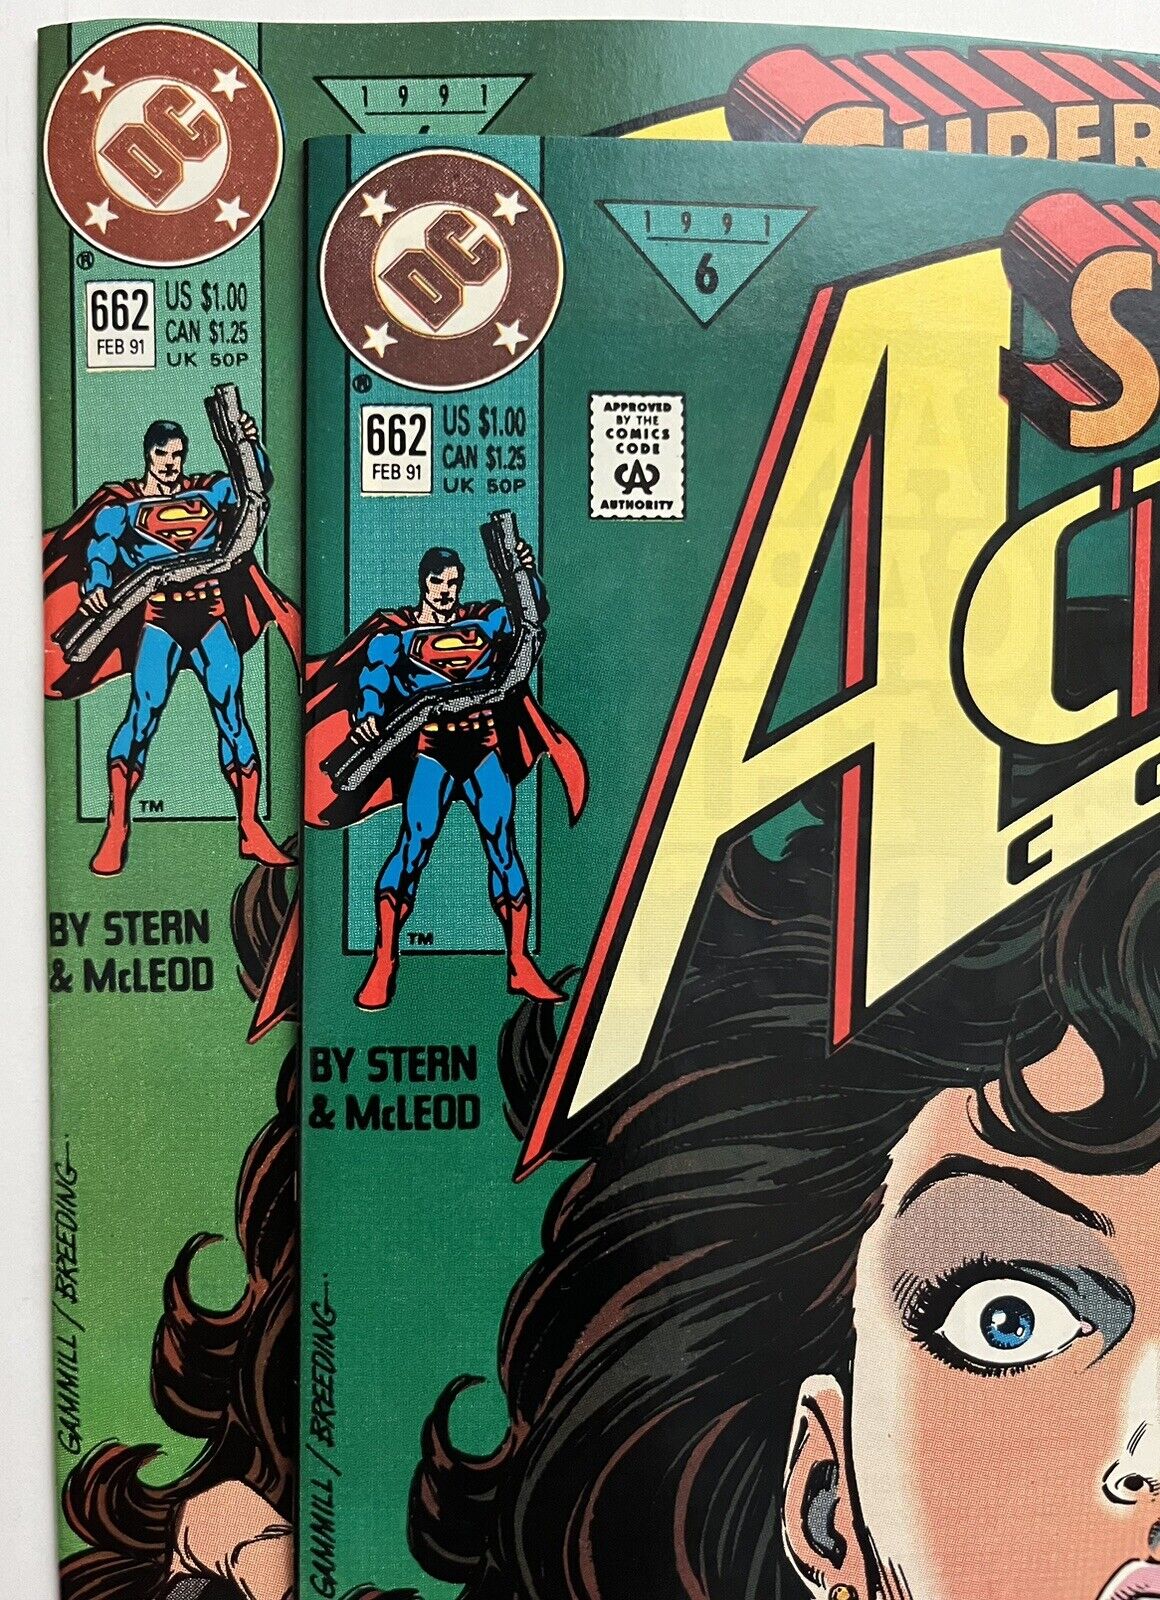 Superman In Action Comics #662 - 2 Book Set Printing Error Off Color, Near Mint